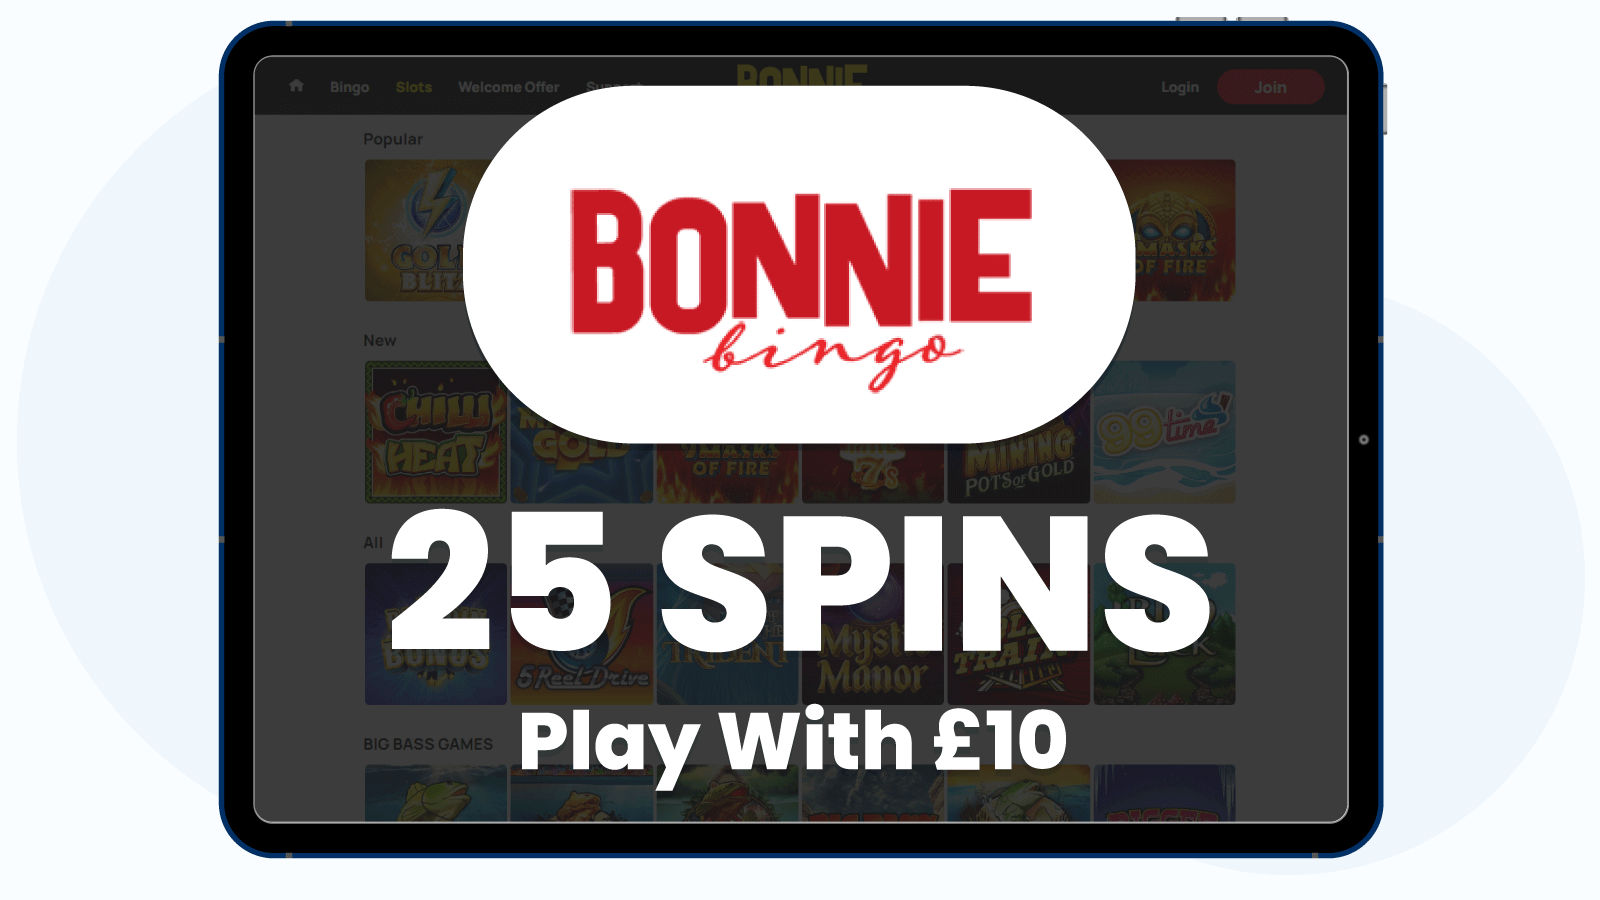 Deposit £5 Play With £10 + 25 Spins At Bonnie Bingo